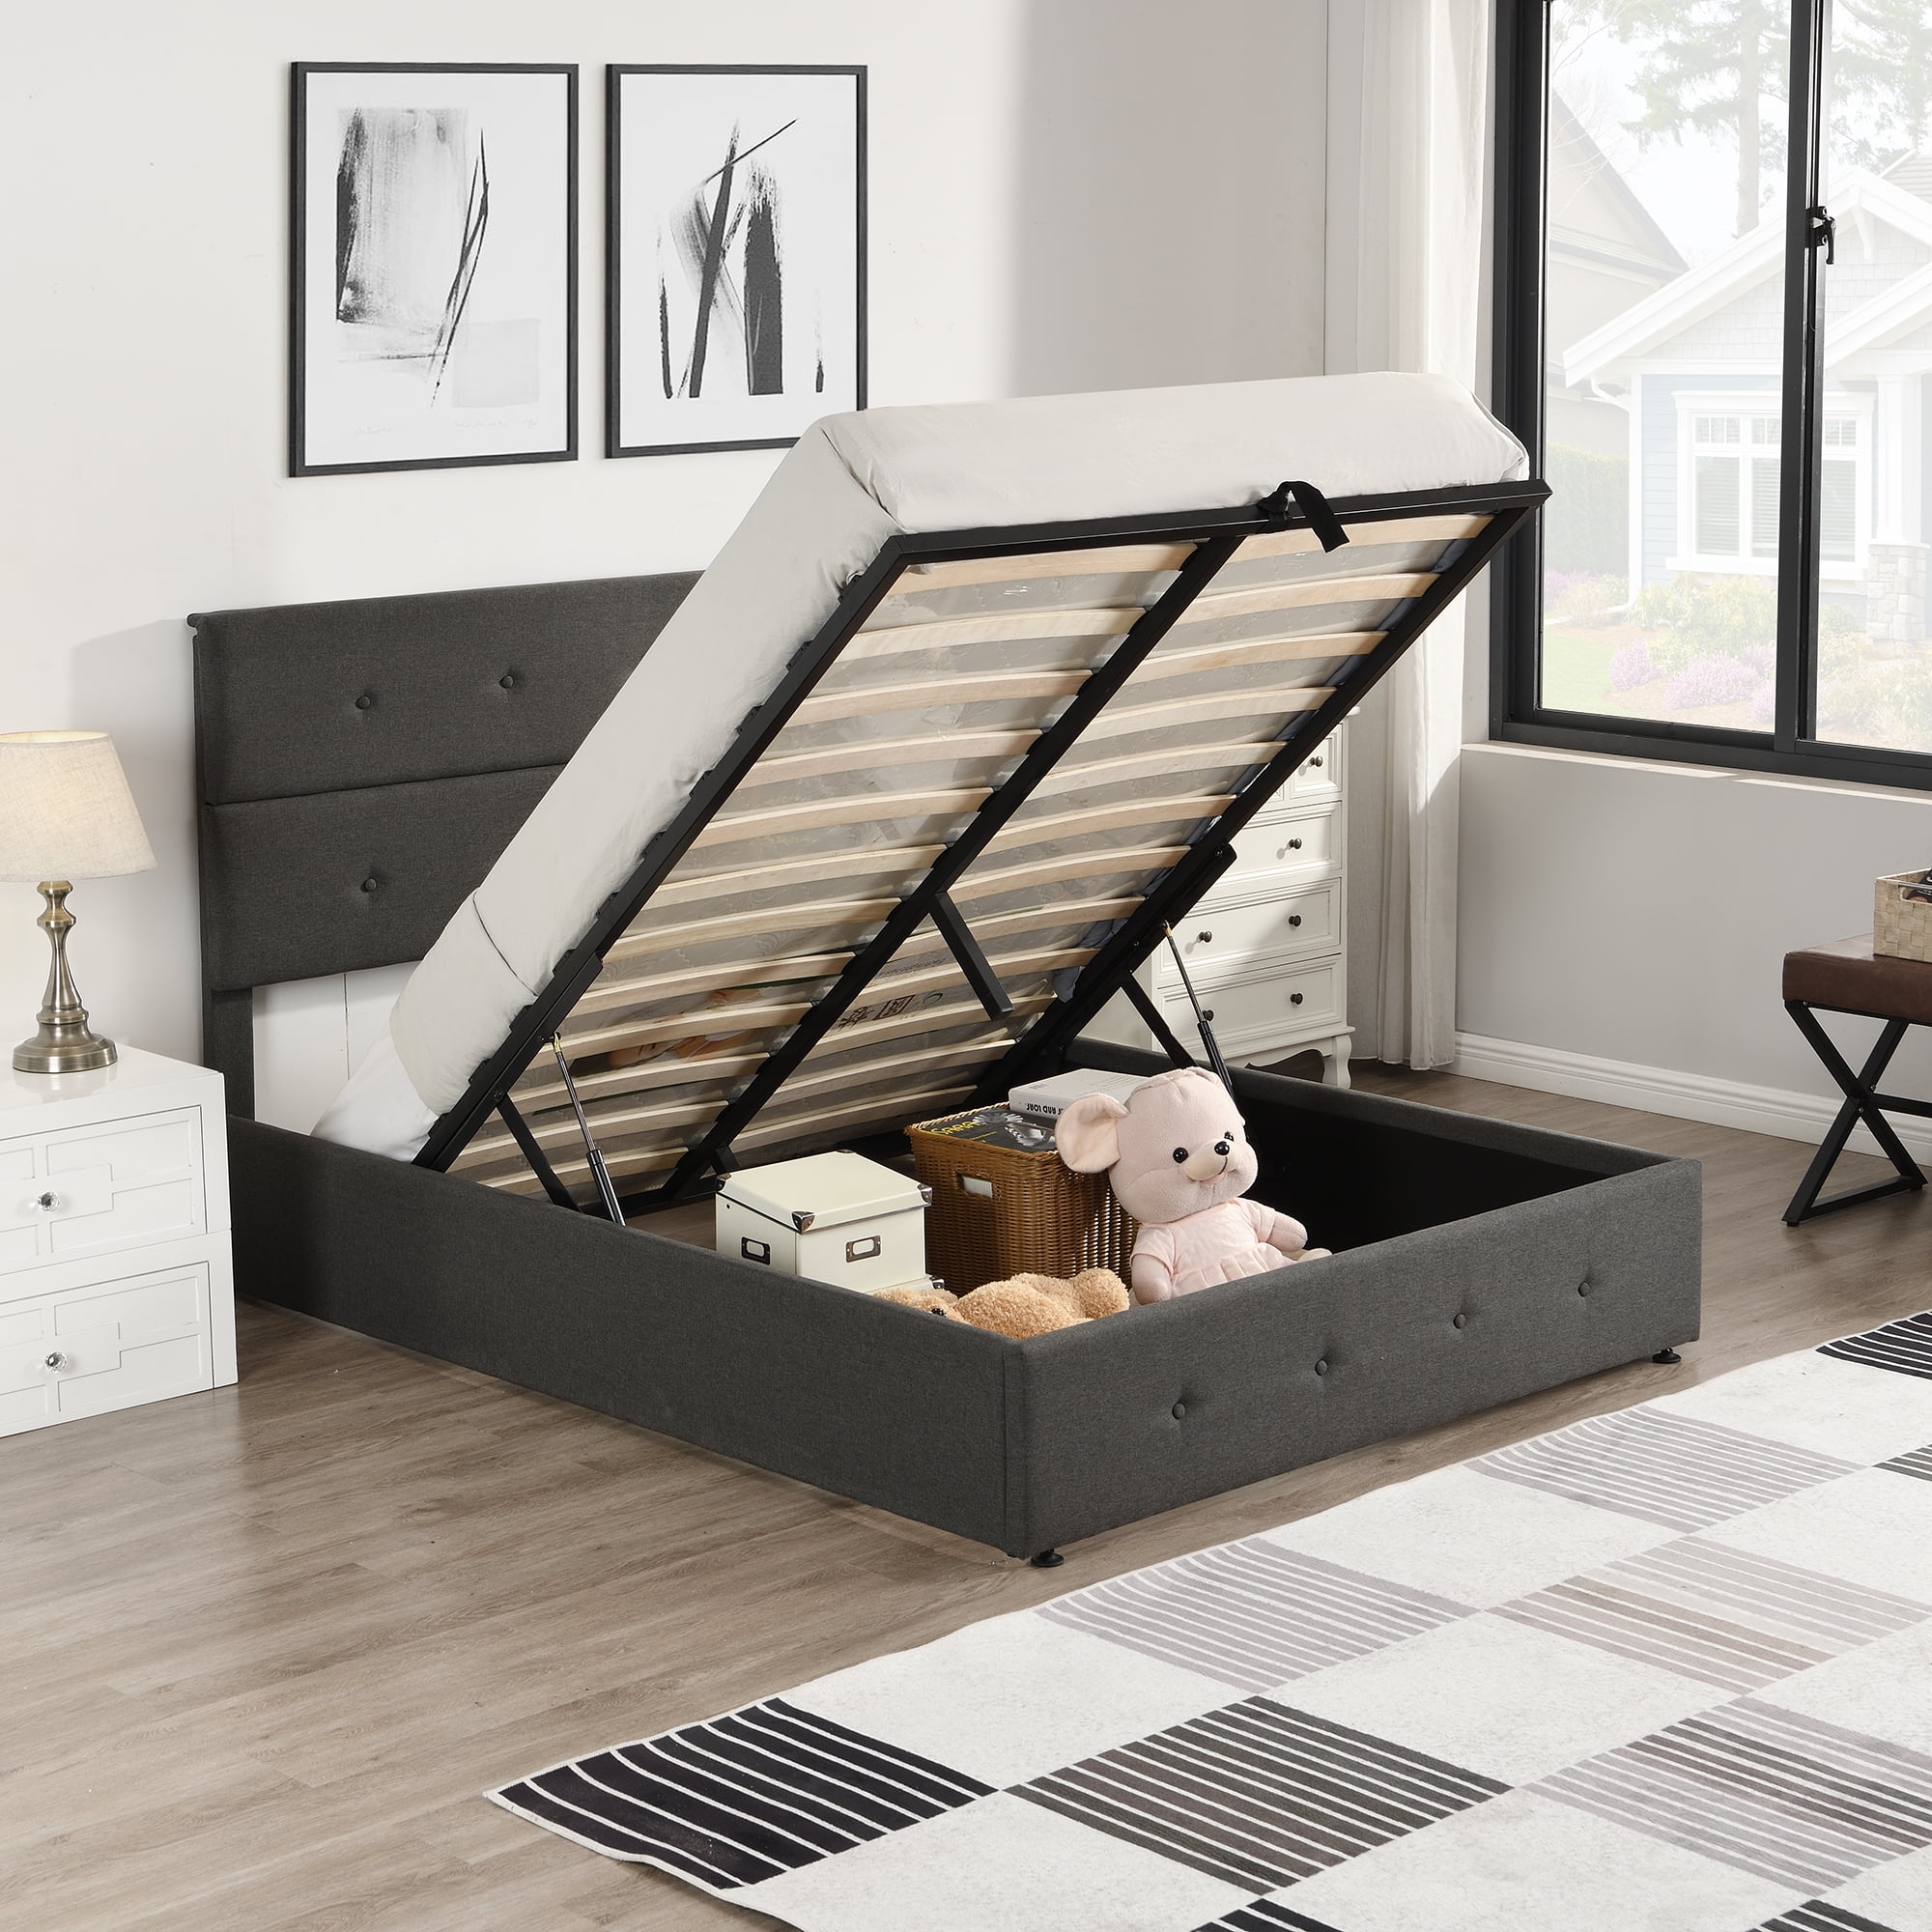 Uhomepro Upholstered Platform Bed Frame, Full Size Bed Frame With Storage No Headboard